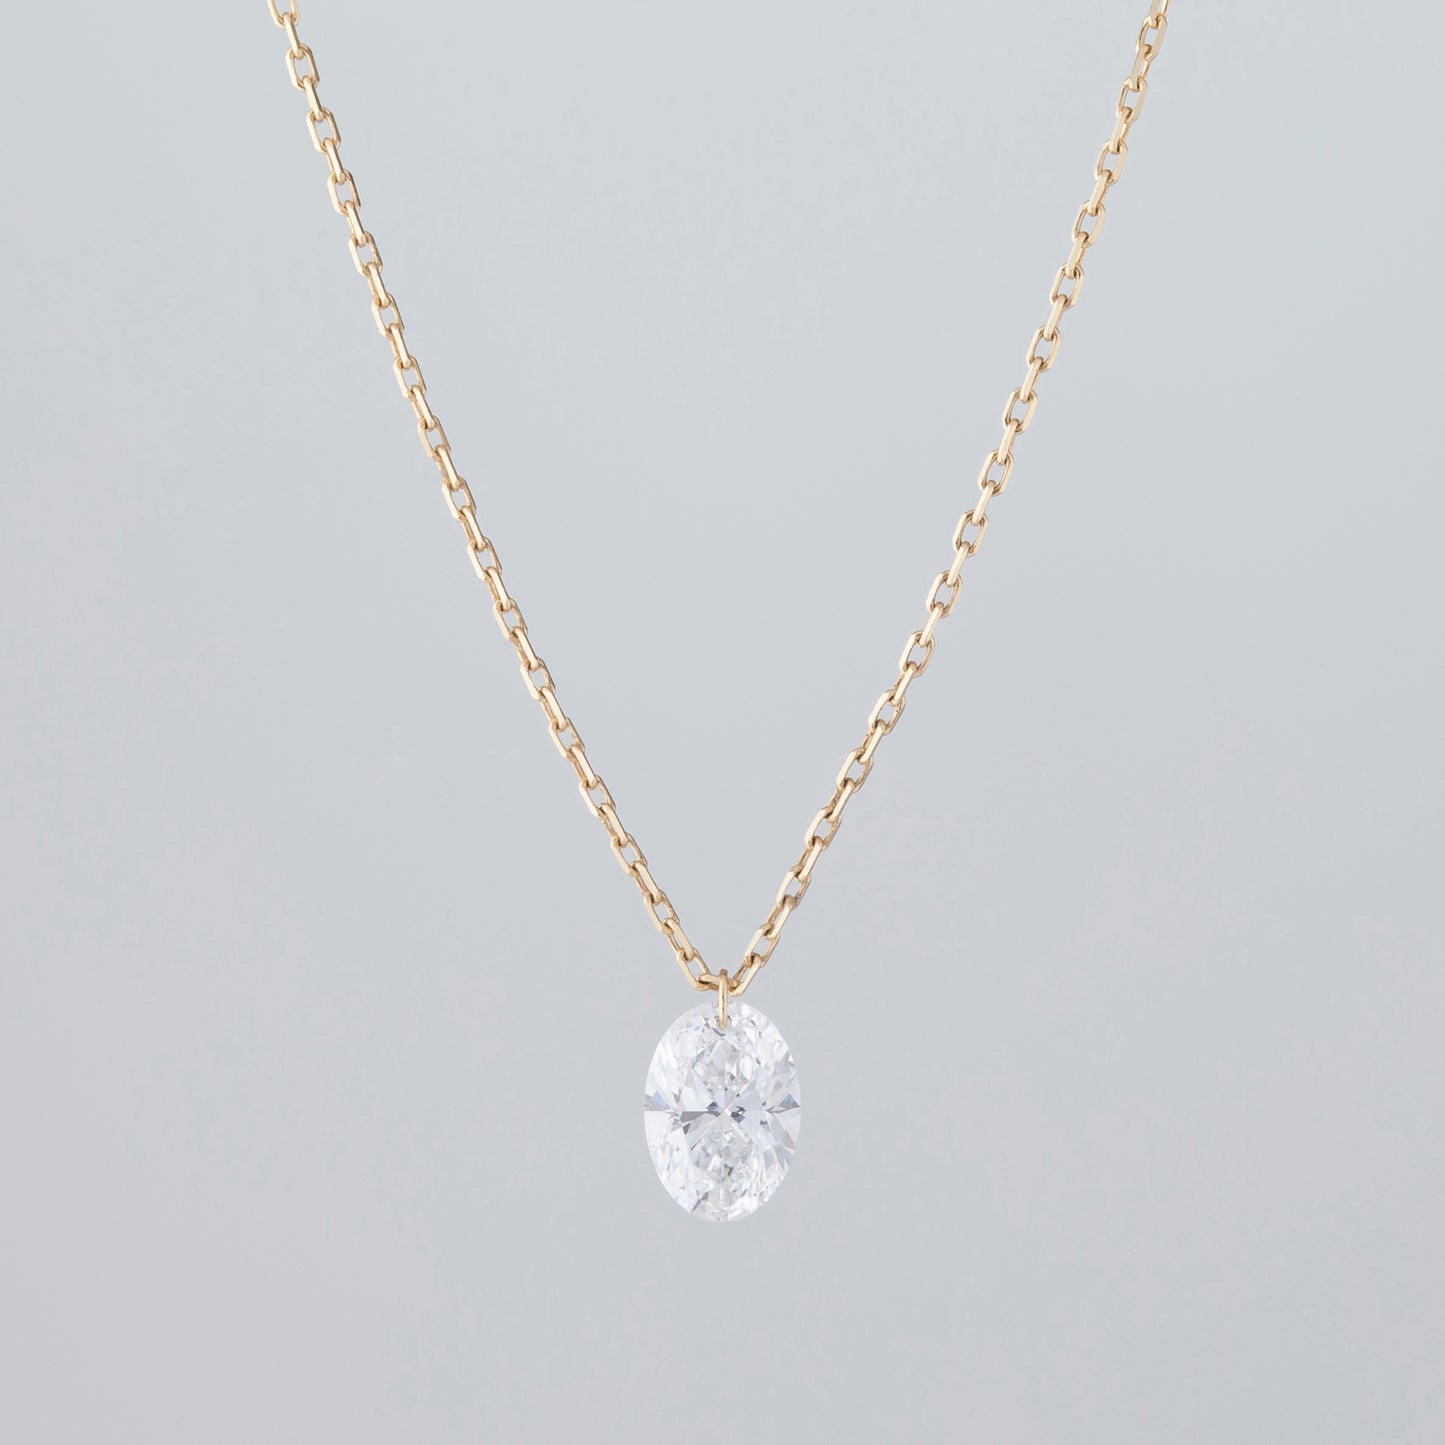 INNOCENCE 1 grain oval necklace / K18 yellow gold / 0.5 carat